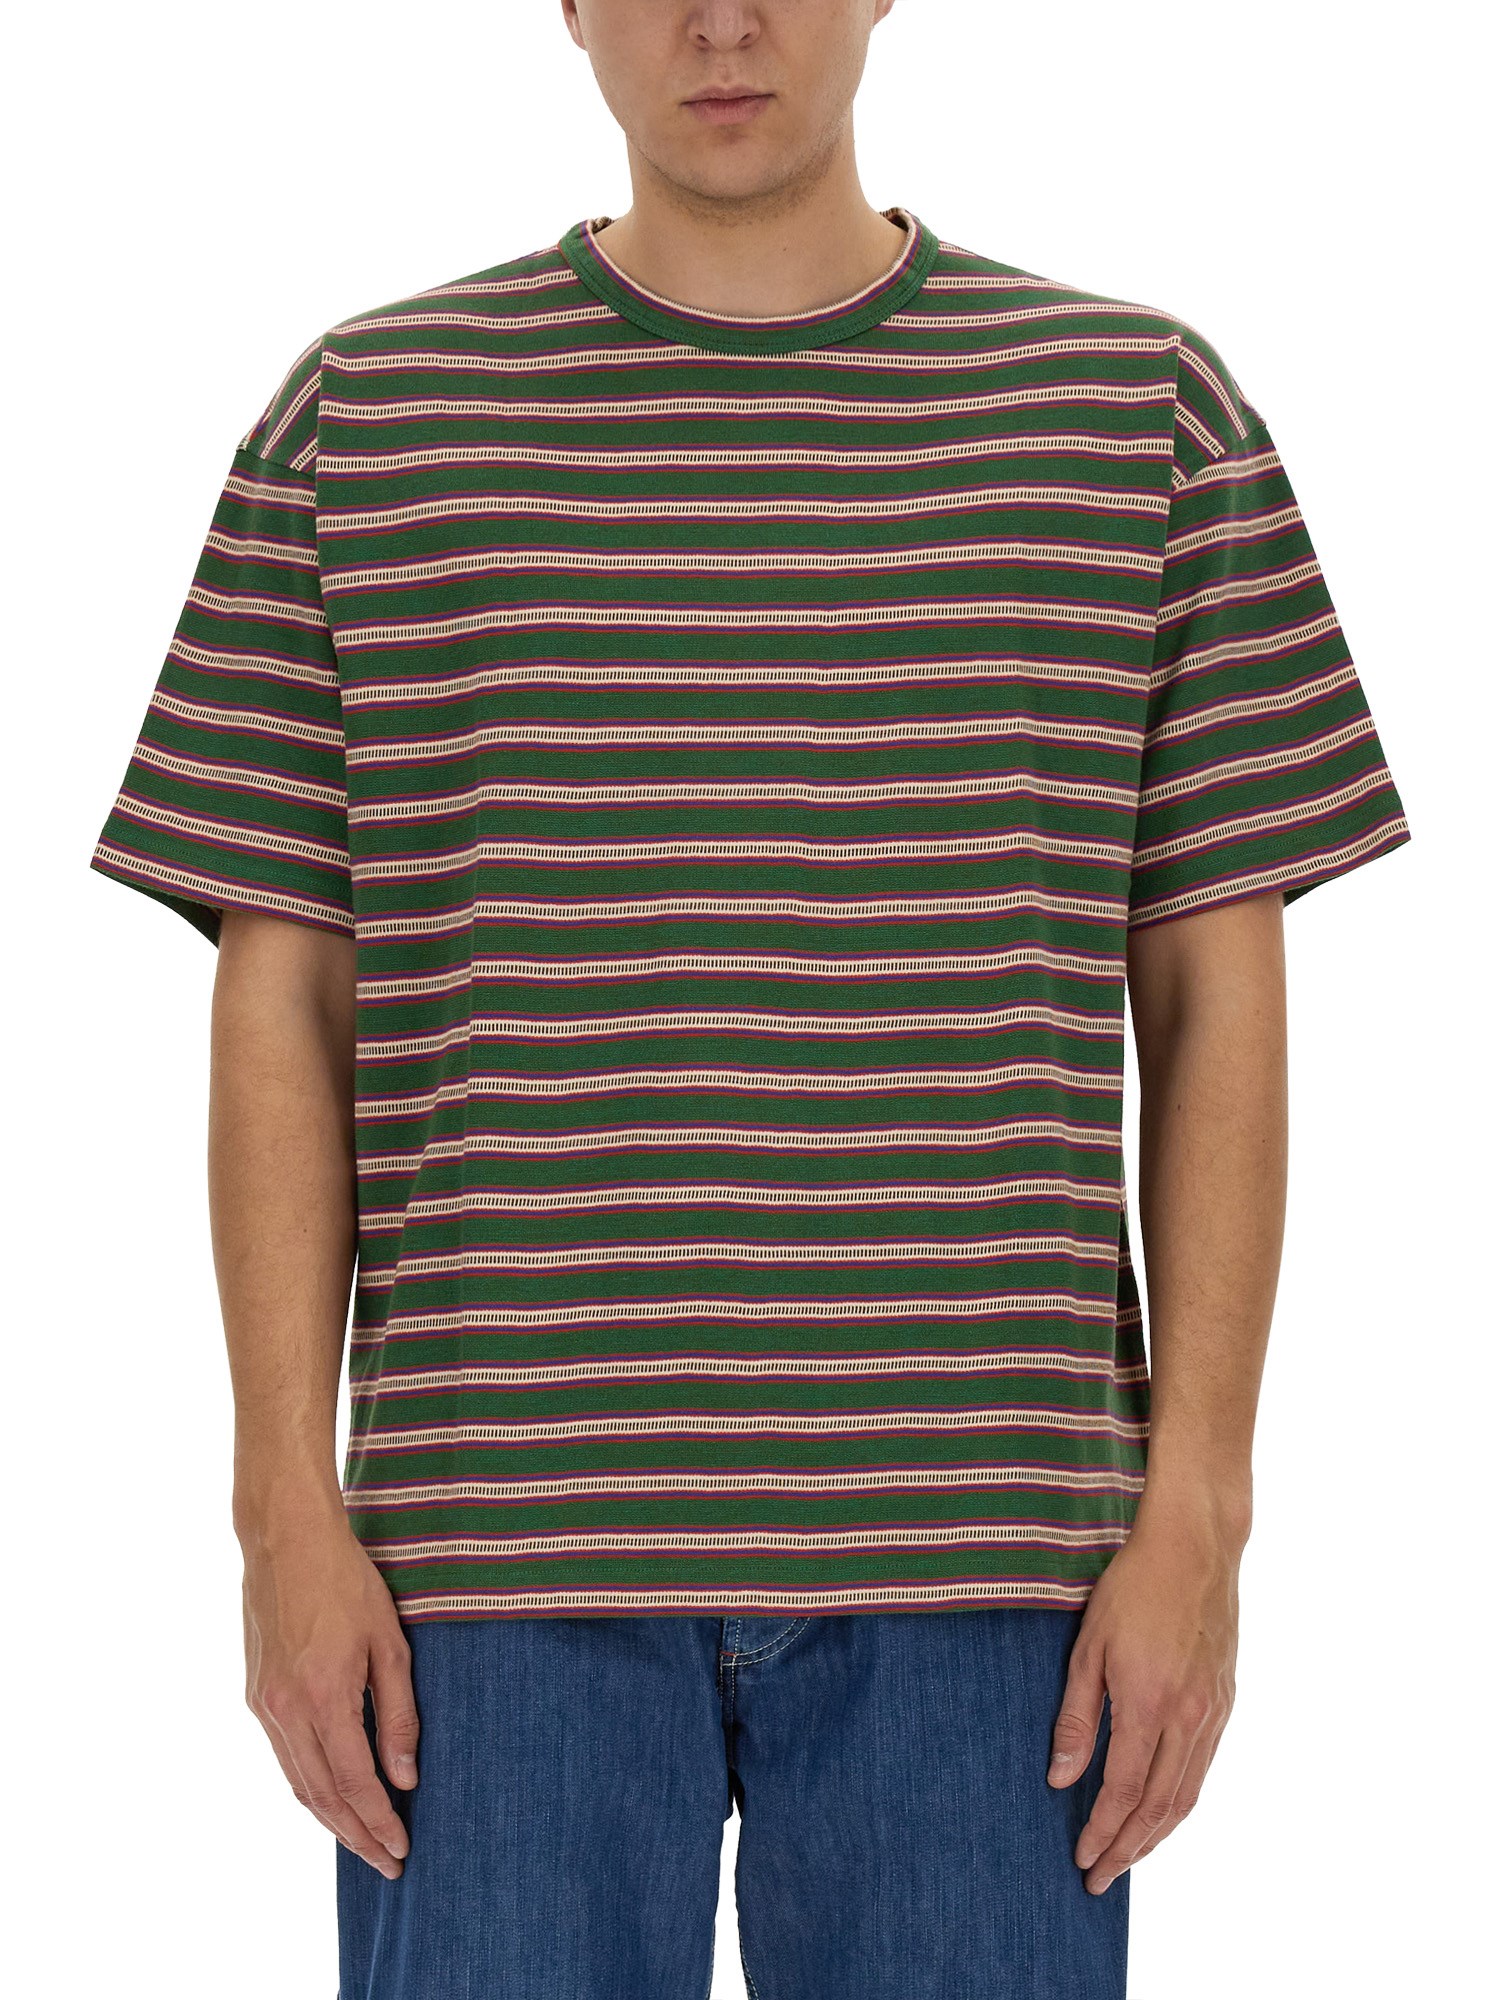 Ymc ymc striped t-shirt